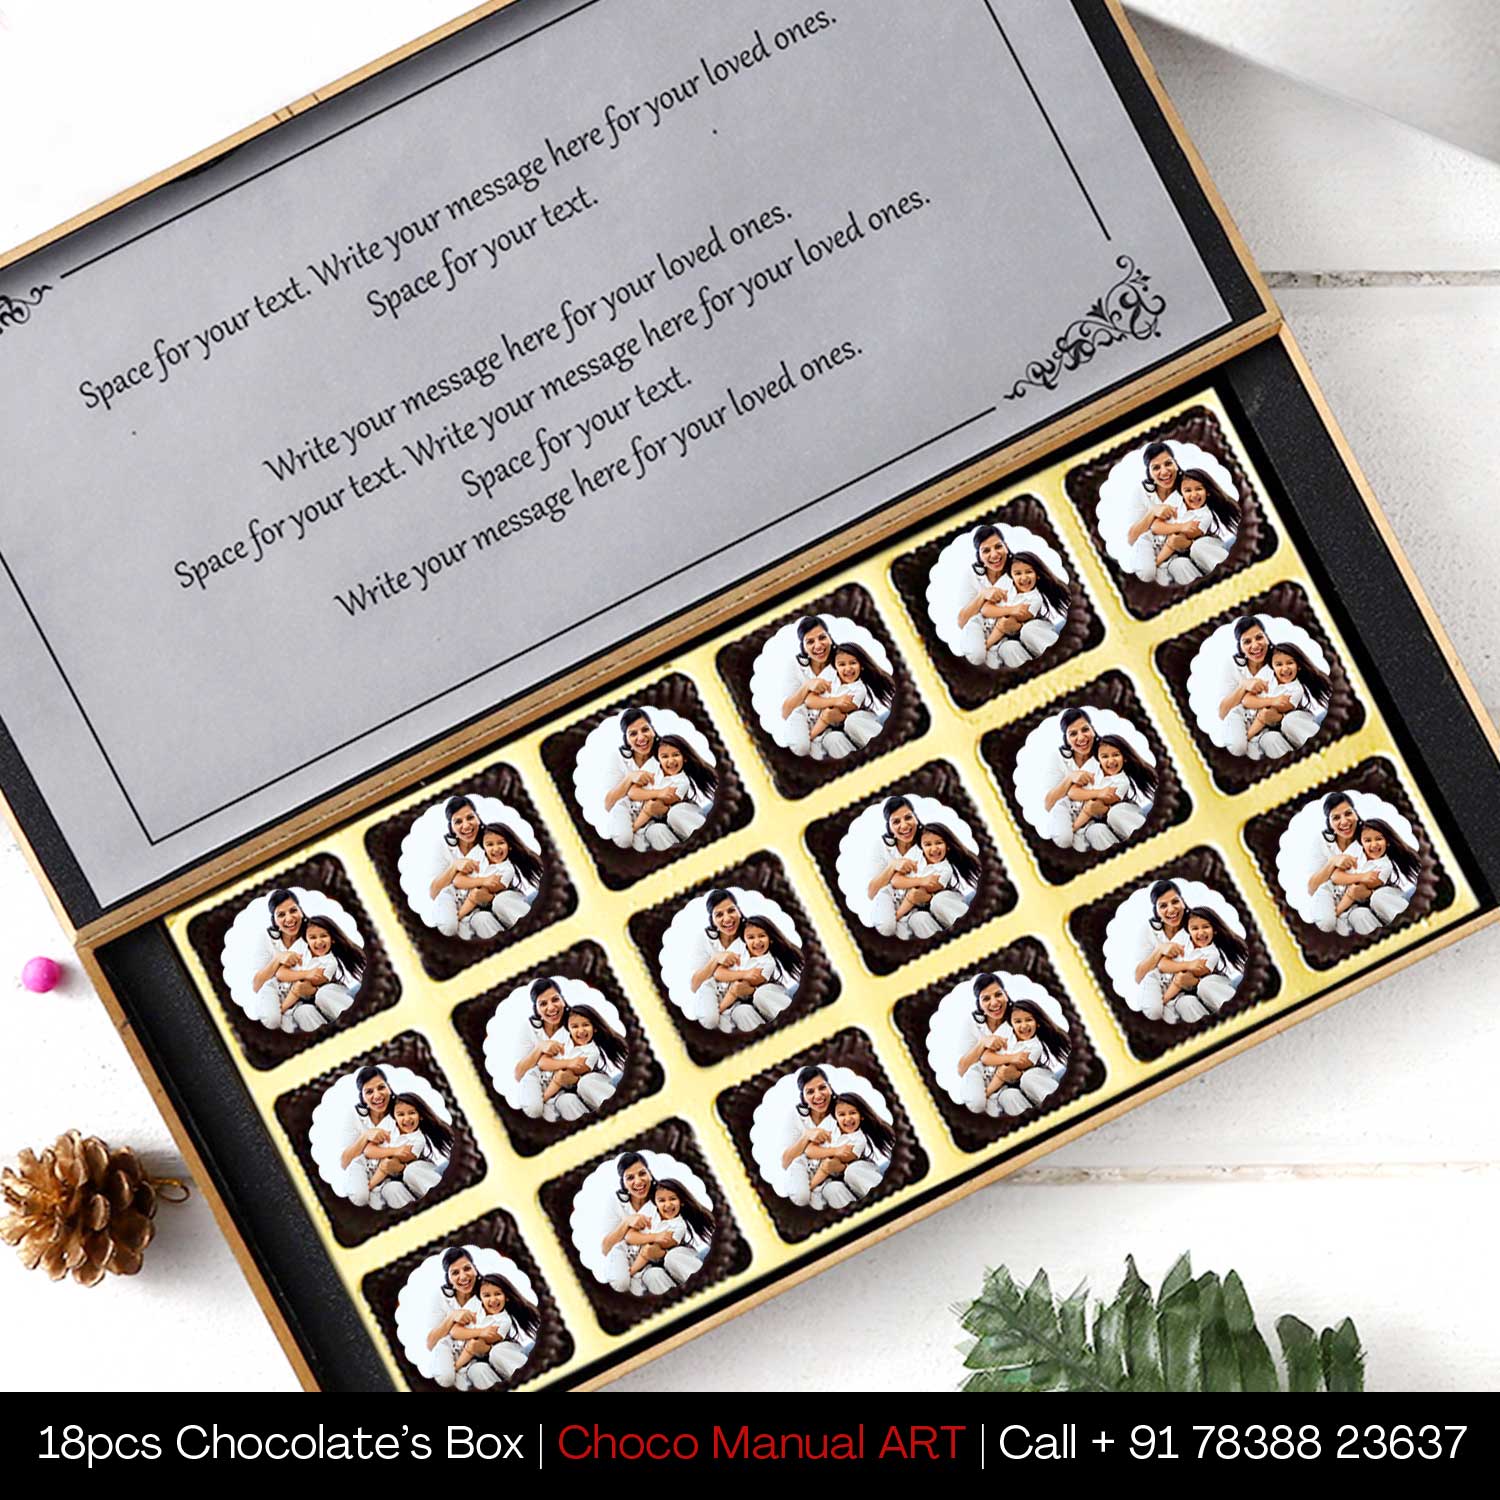 Cute graphics & photo printed box of chocolates